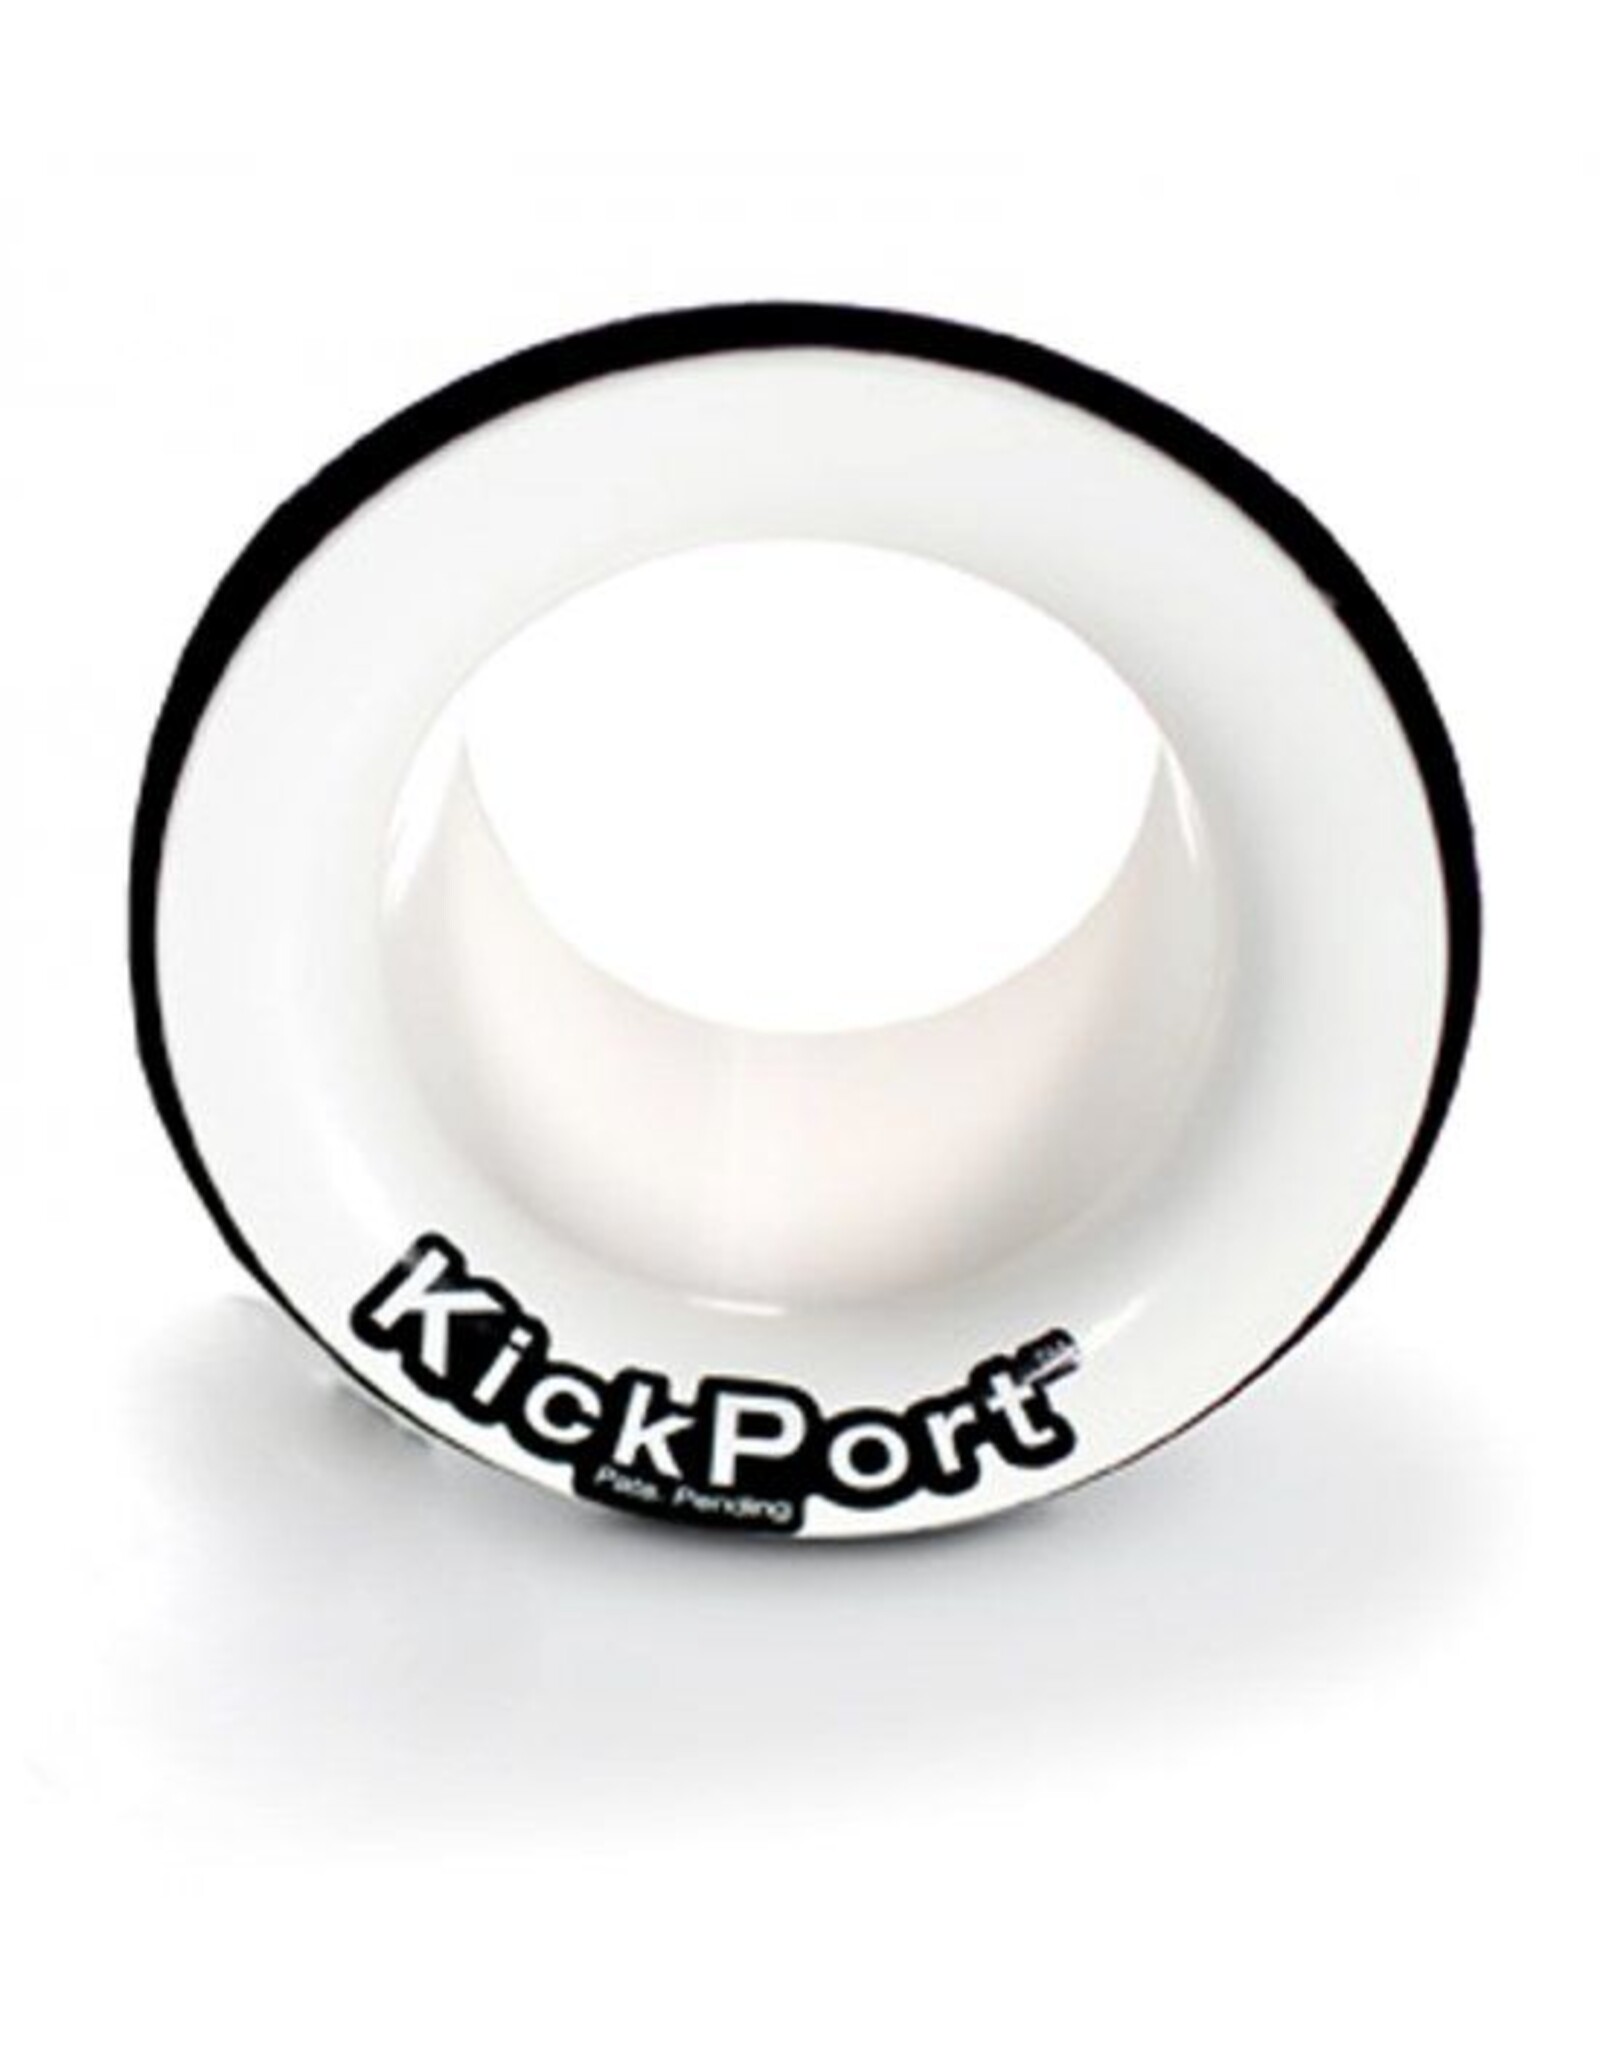 Kickport  KP2_CA CANDY damping control bass booster